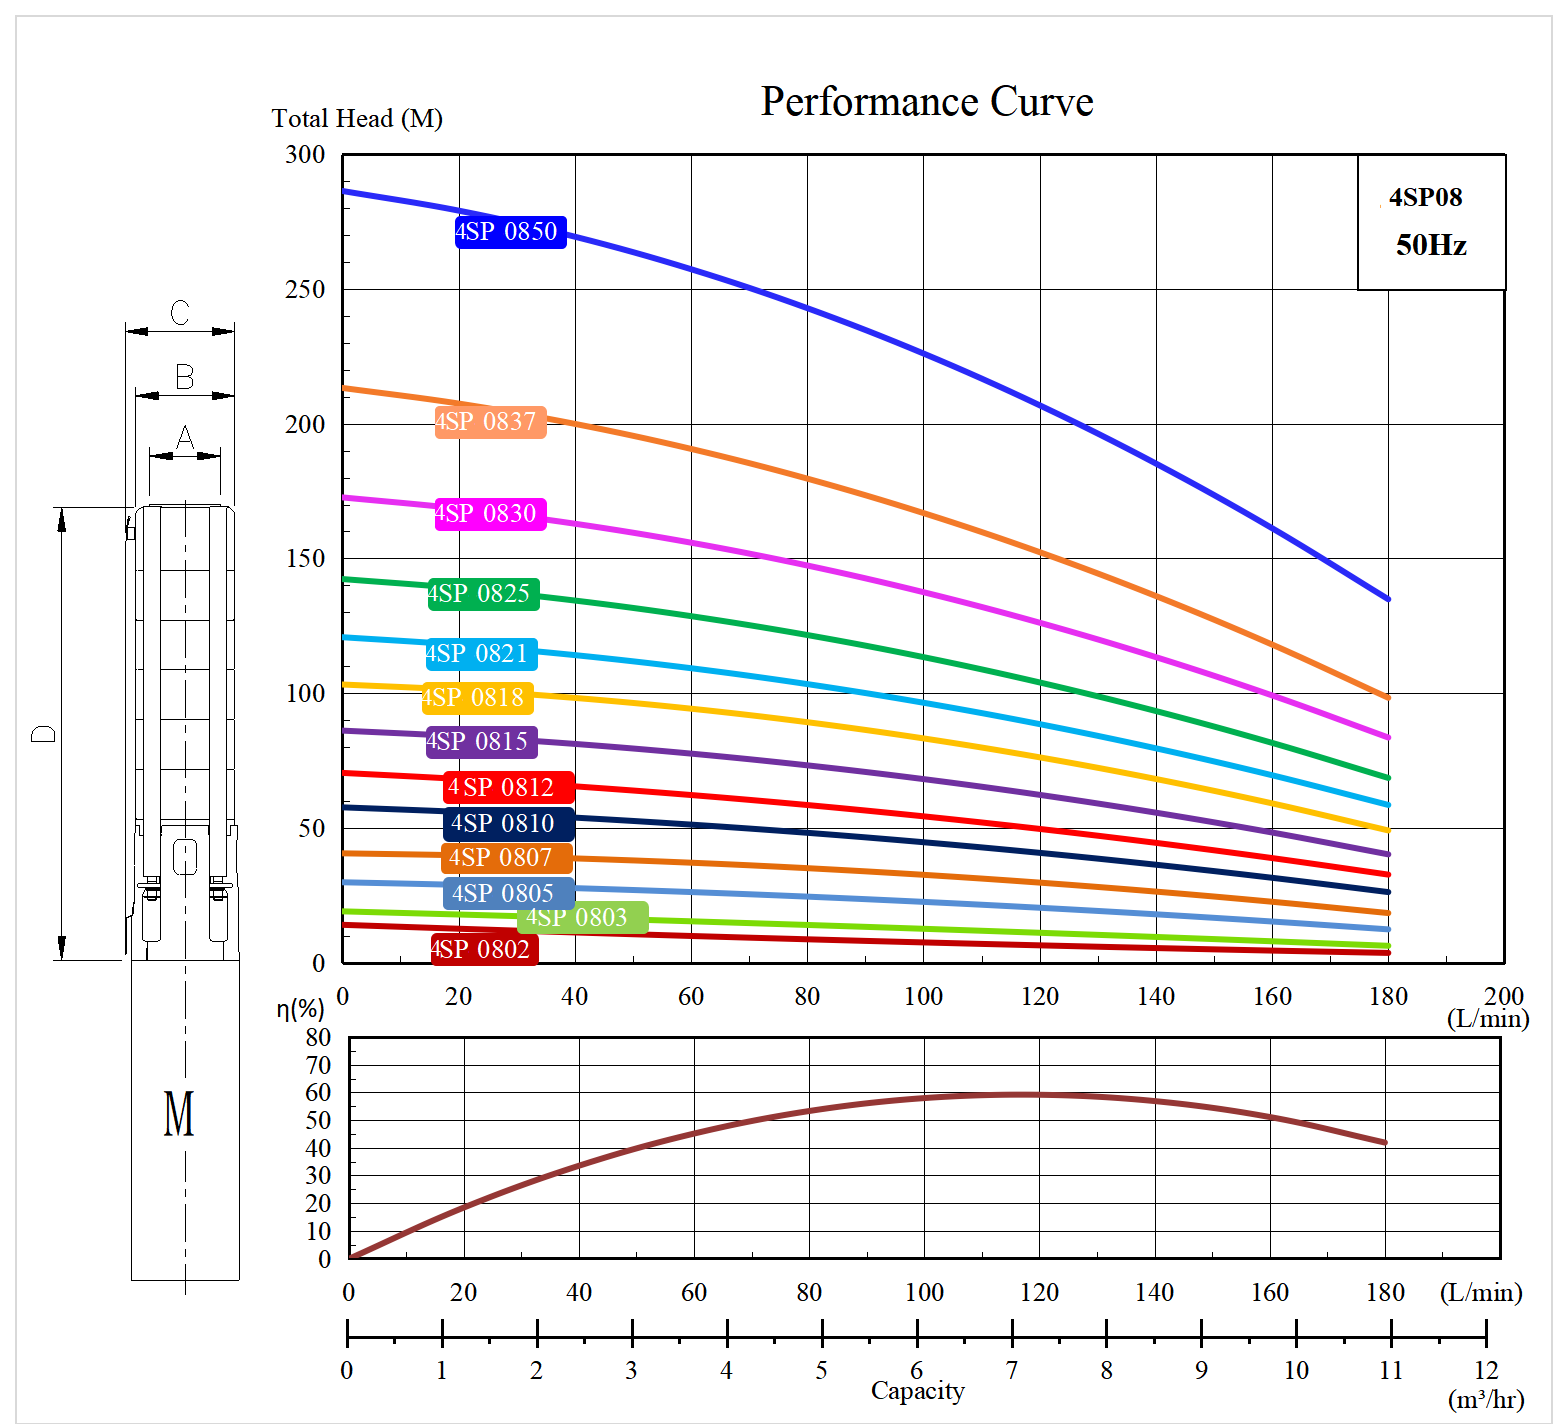  характеристики насос свердловинний 4SP0812 заміна та аналог насоса ЭЦВ5-6,5-50 